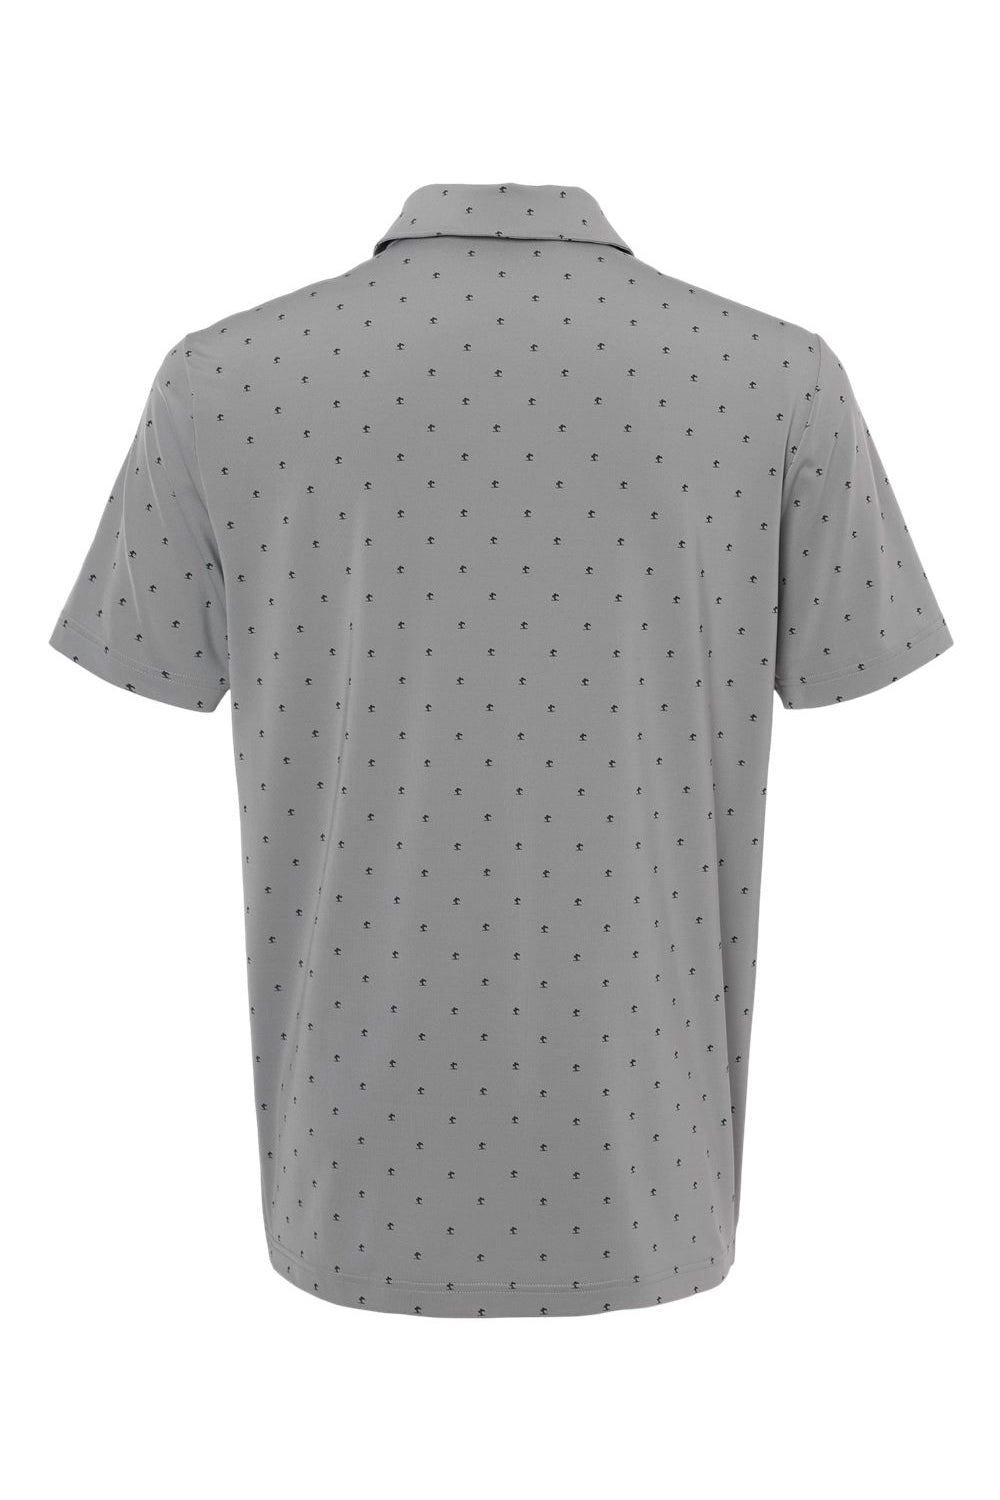 Adidas A574 Mens Pine Tree Moisture Wicking Short Sleeve Polo Shirt Grey/Black Flat Back